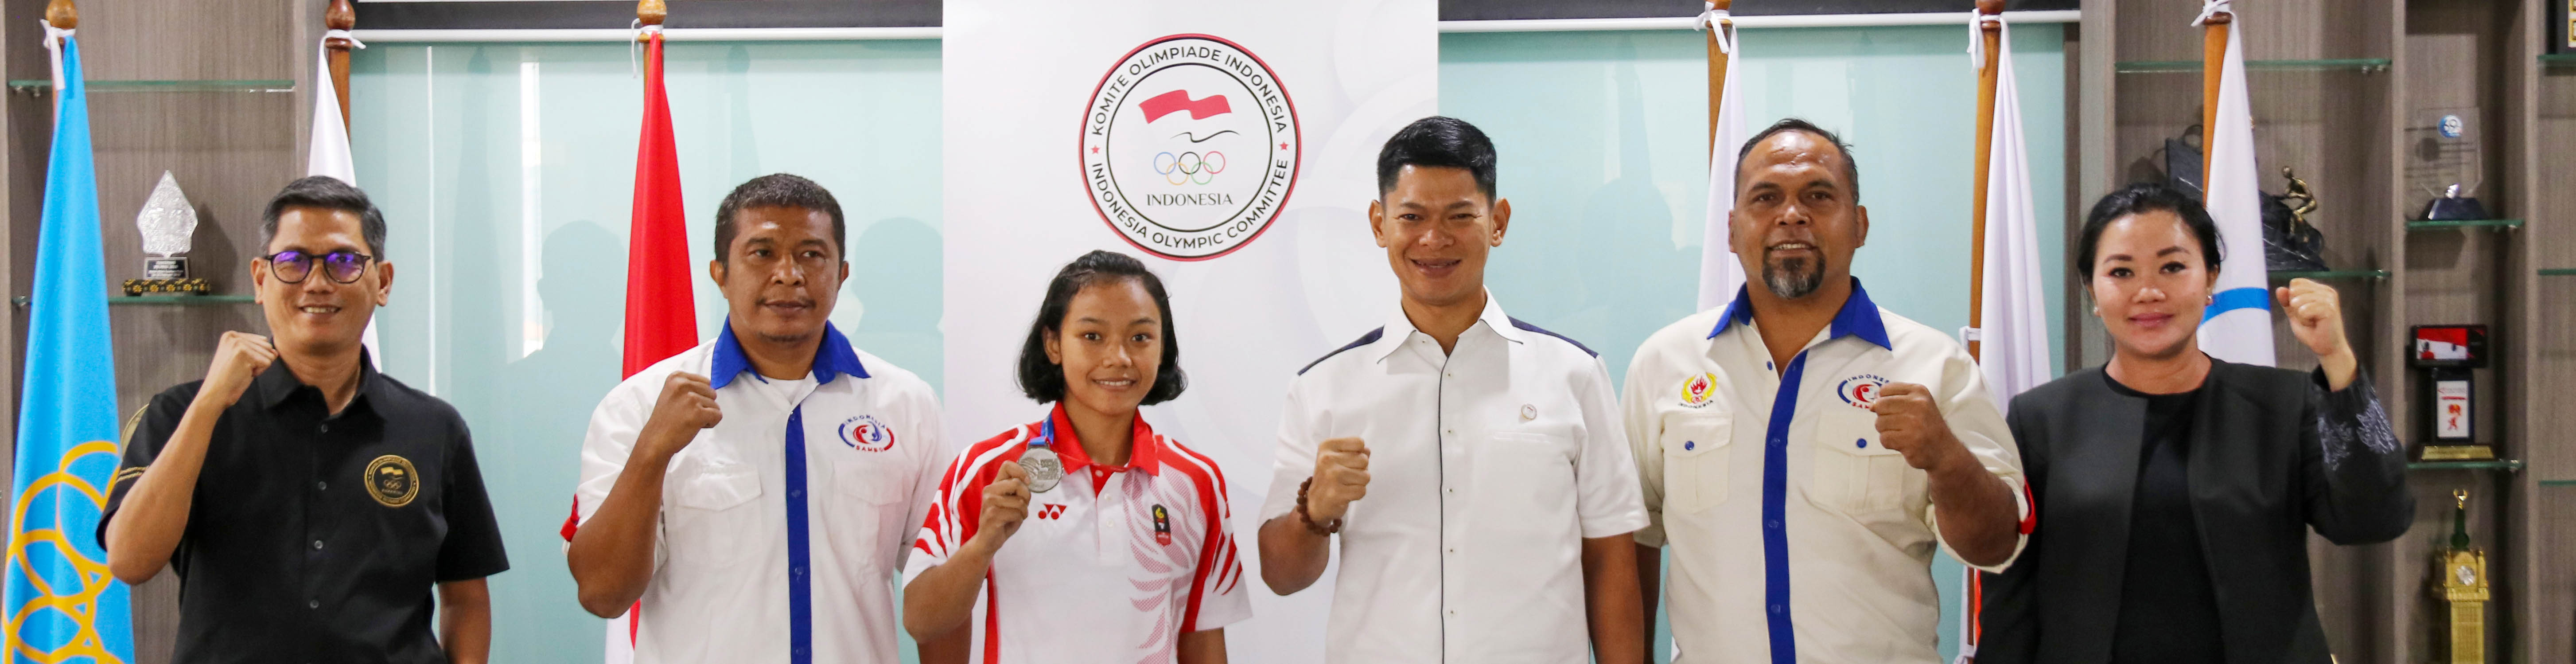 NOC President Meets World Junior Sambo Silver Medalist - Indonesia Olympic Commitee